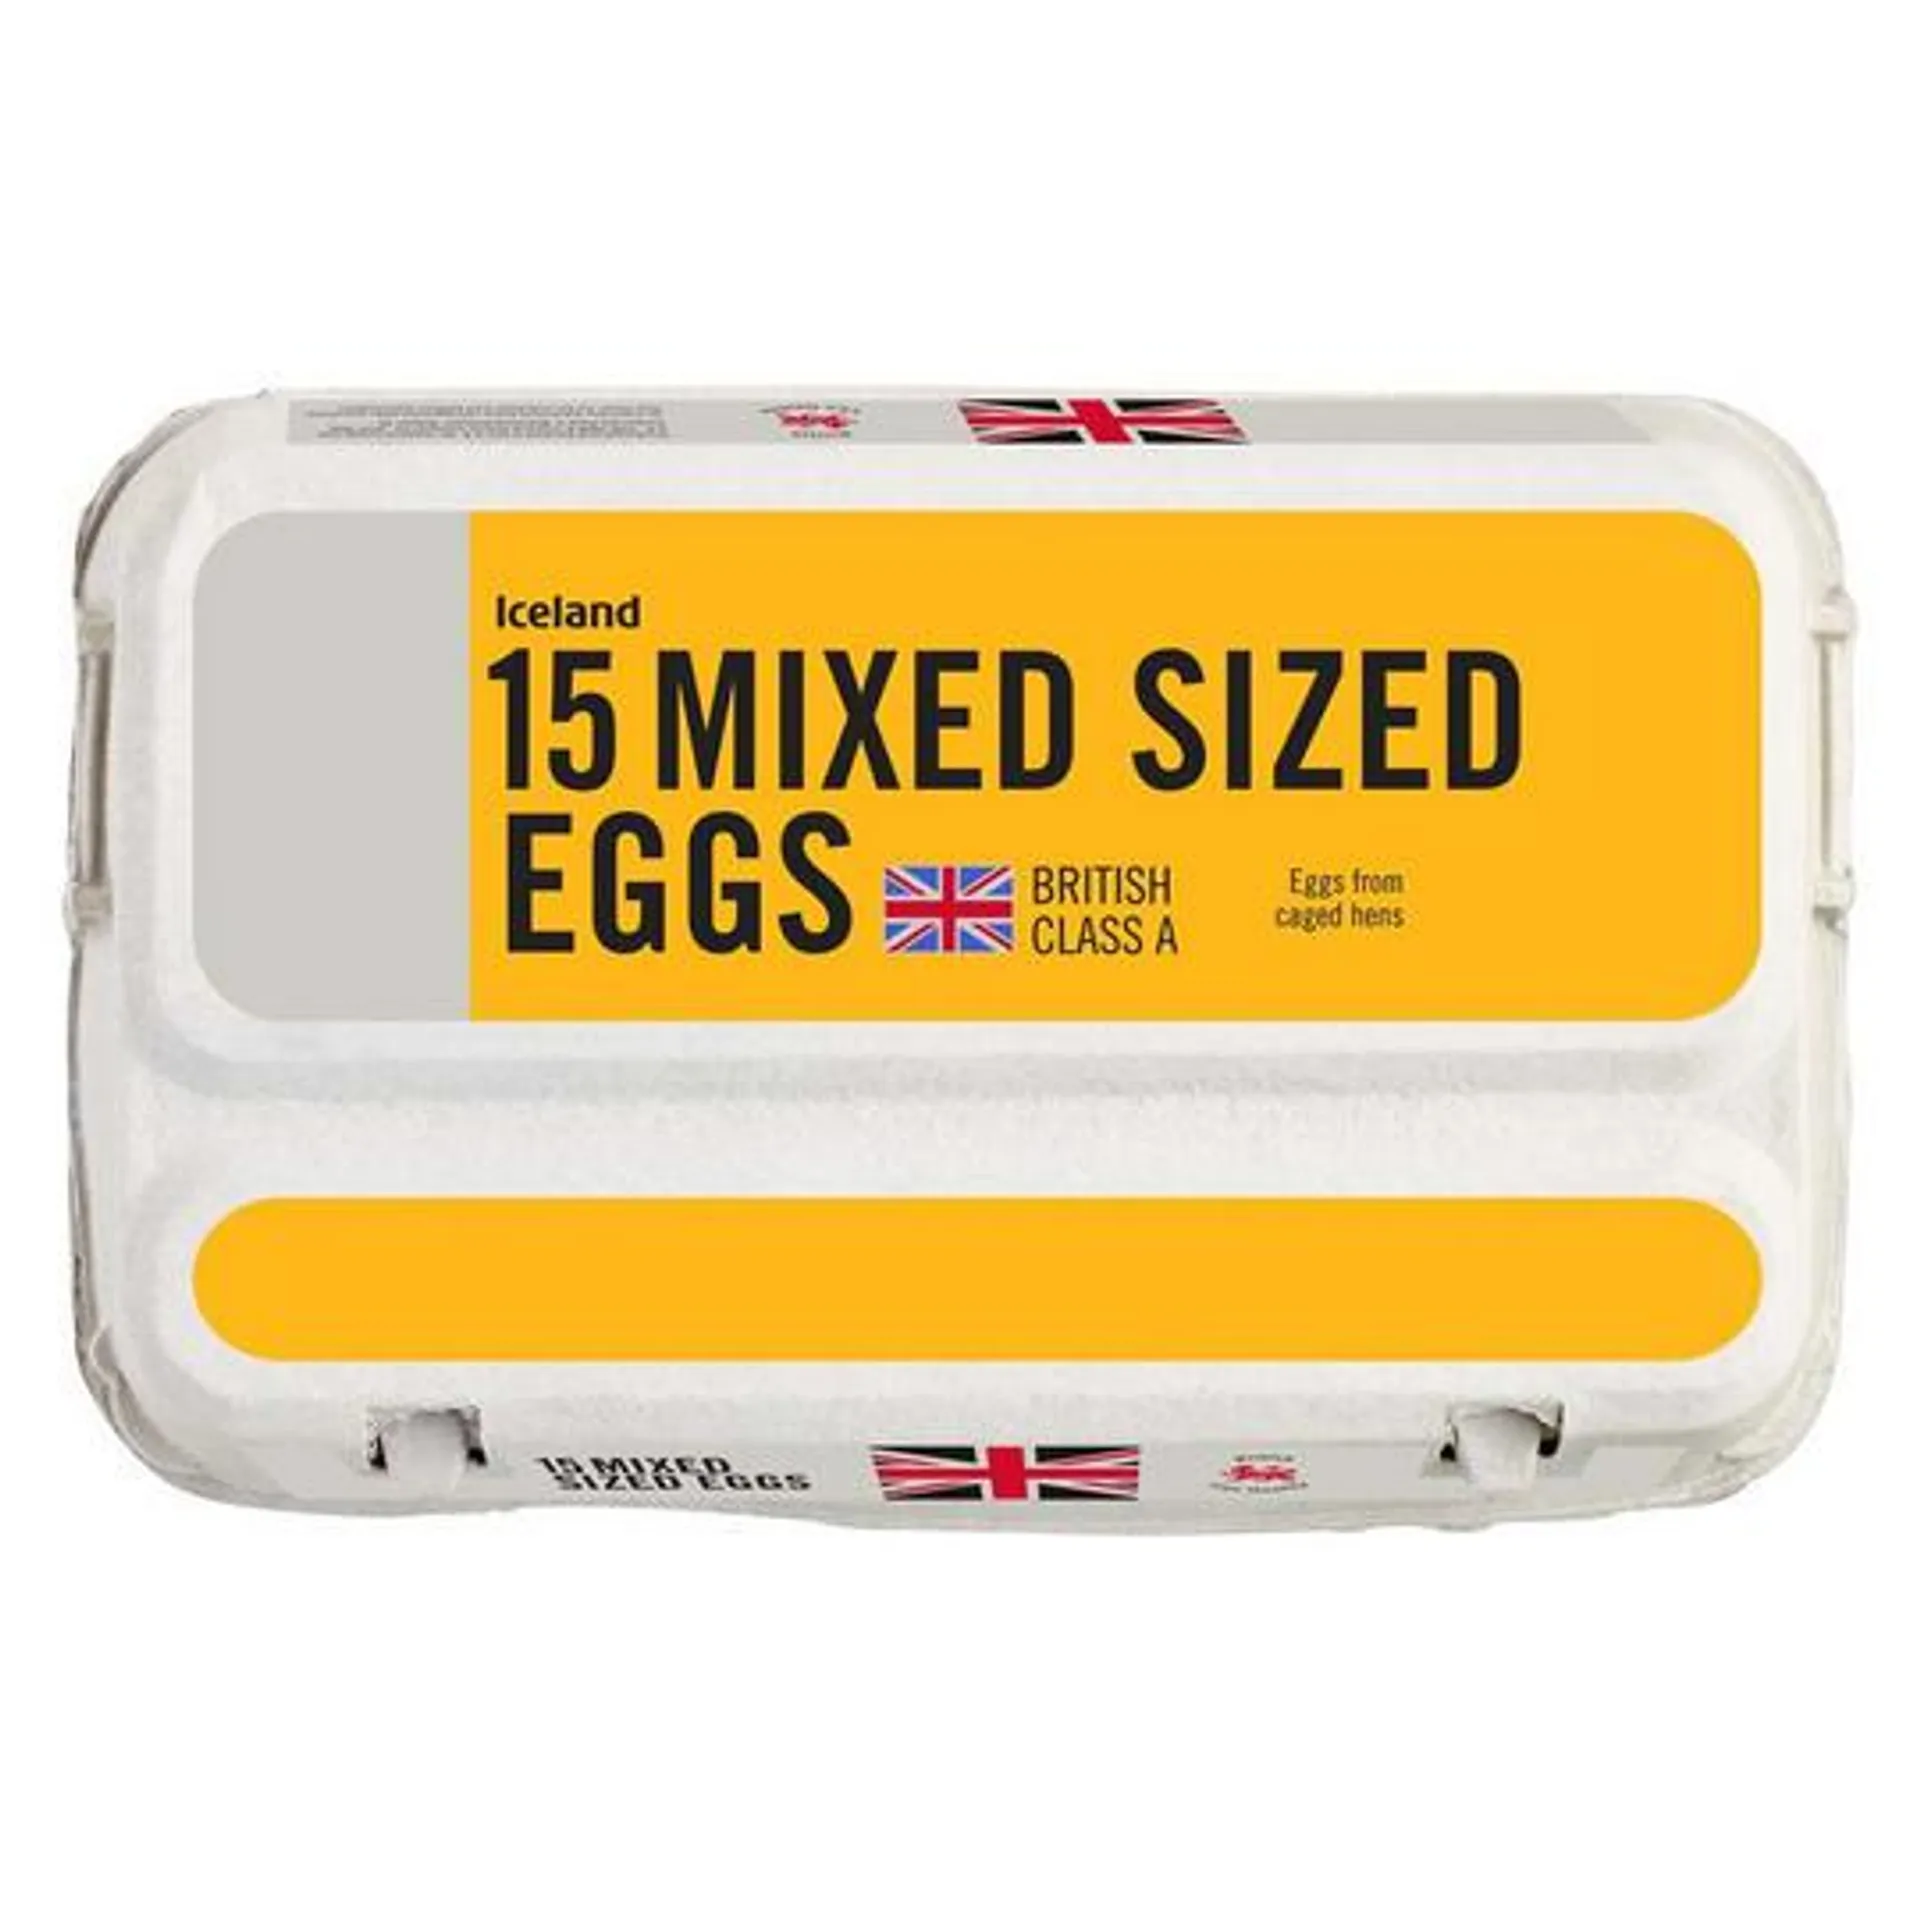 Iceland 15 Mixed Sized Eggs 807g